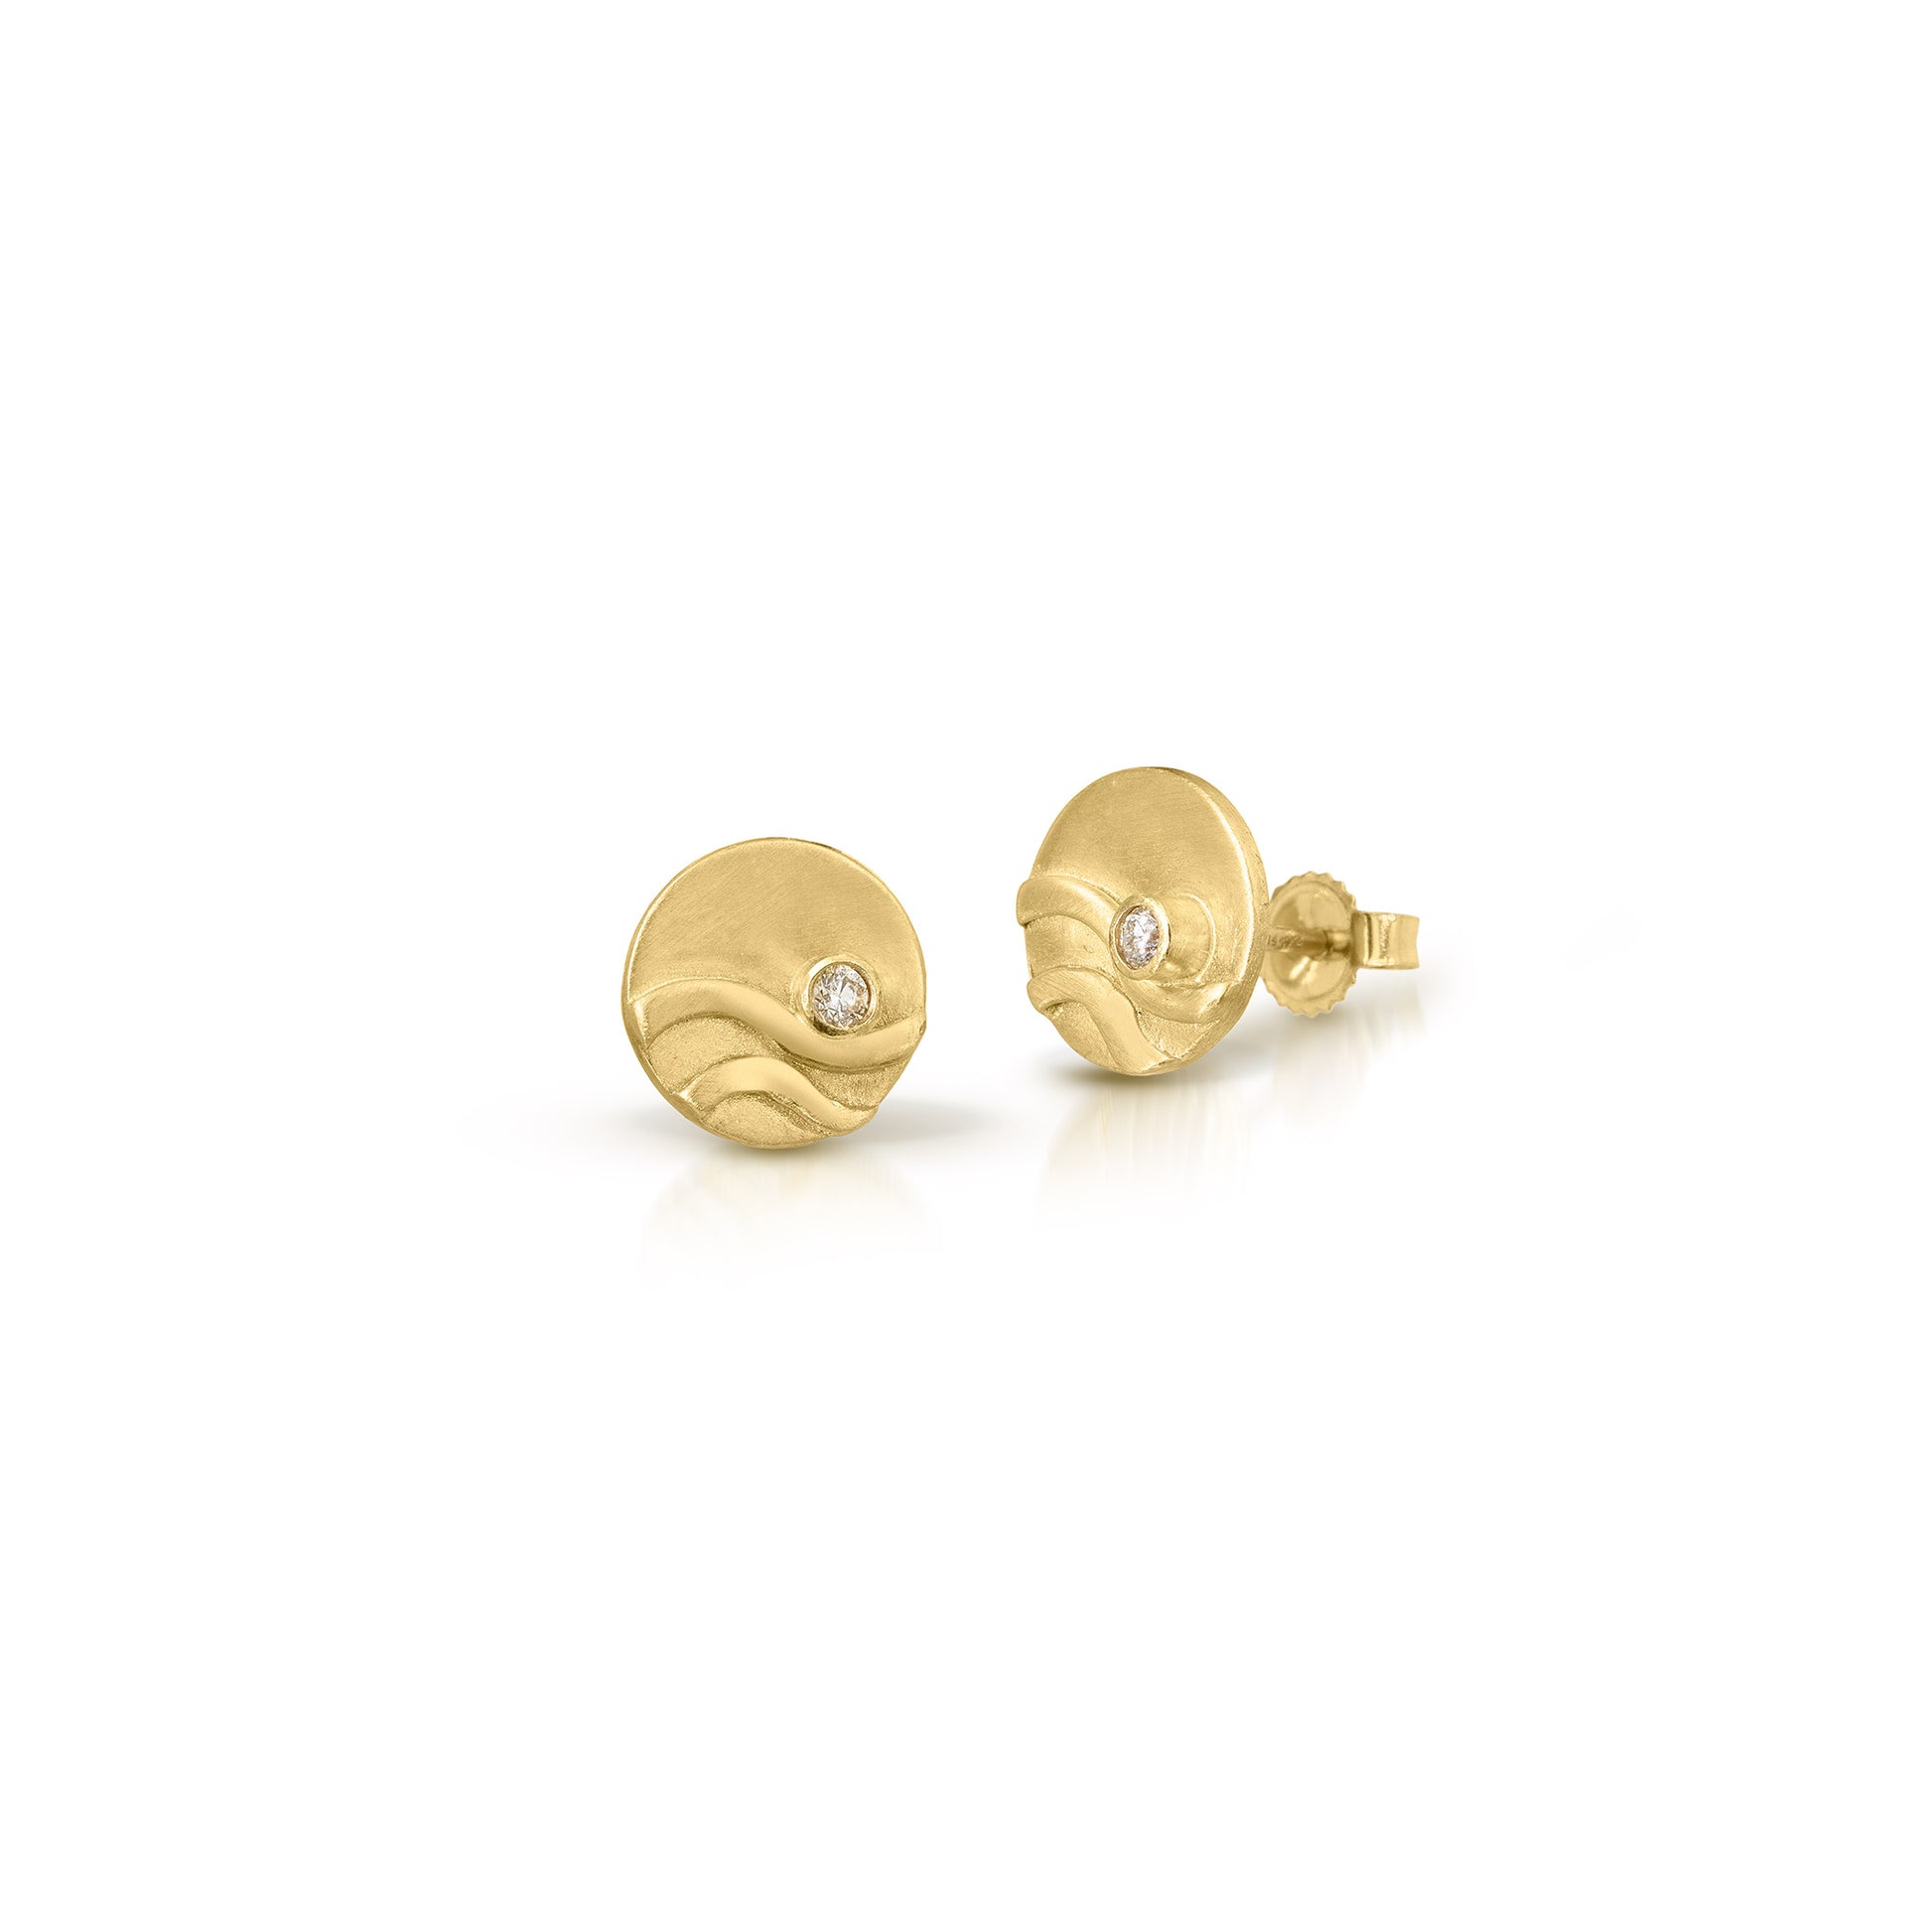 Gold and diamond wave stud earrings by Jen Lesea Designs